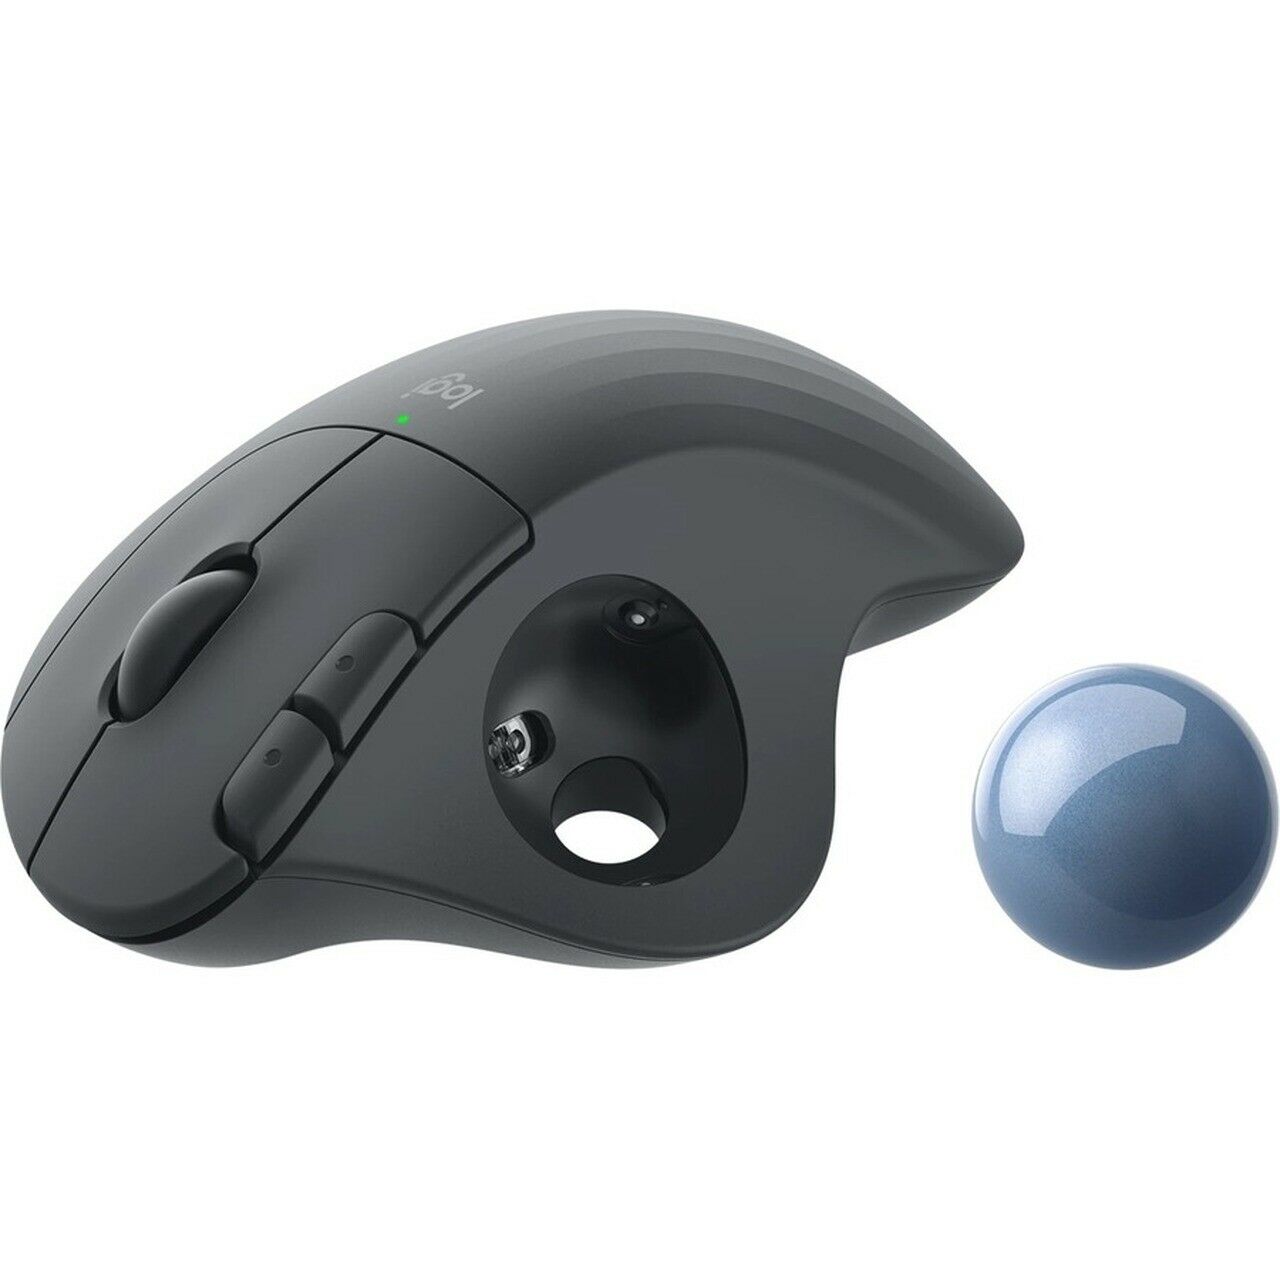 Logitech ERGO M575 Wireless Trackball Mouse with Adjustable Ergonomic 910-005869